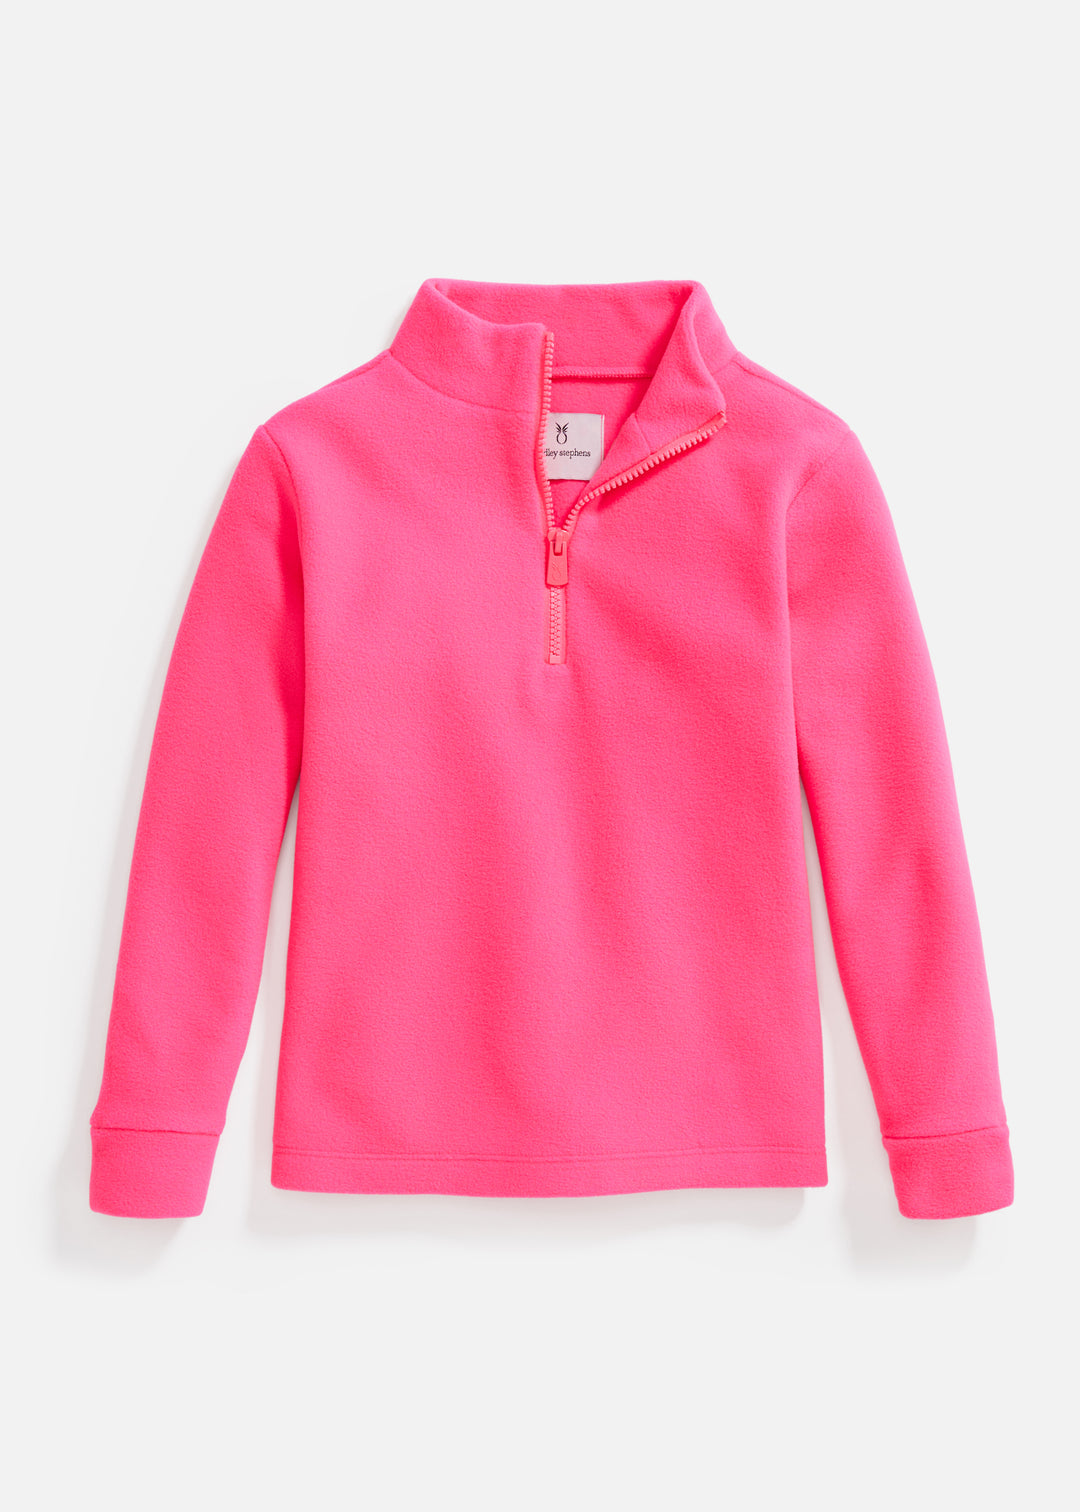 Kids Windabout Pullover in Vello Fleece (Neon Pink)